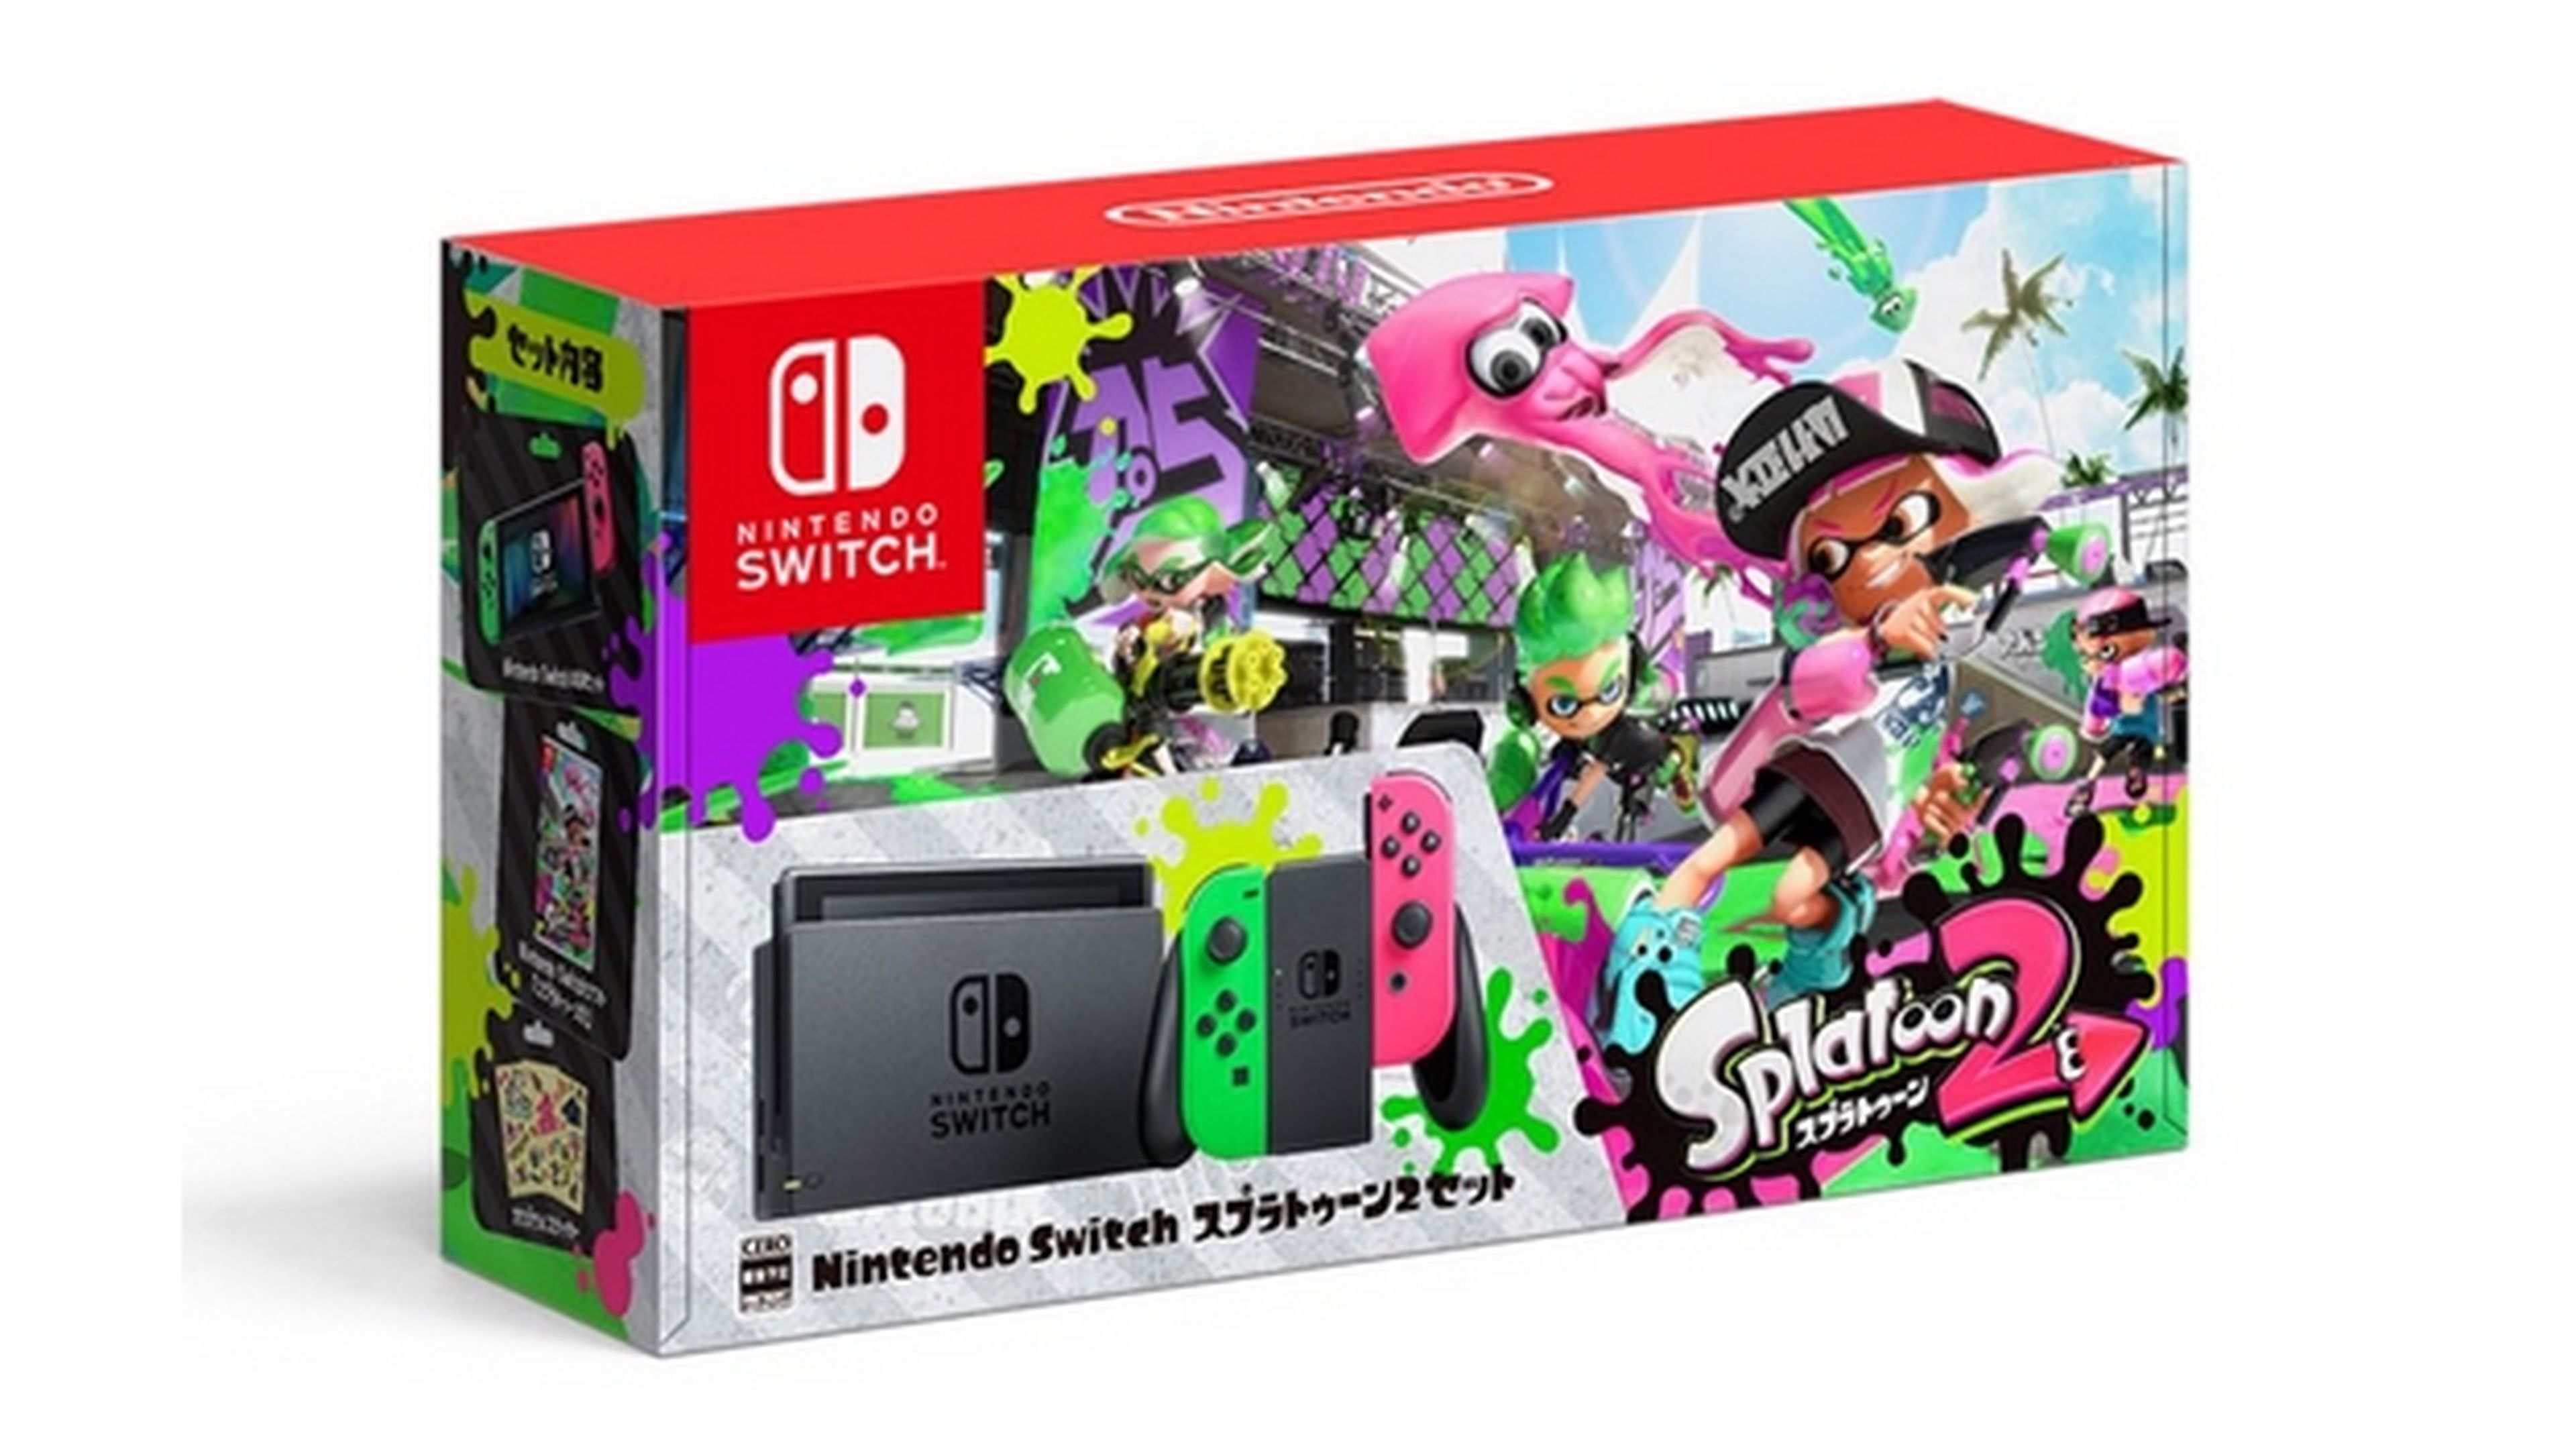 Nintendo vende cajas vacías de Nintendo Switch por 4 euros